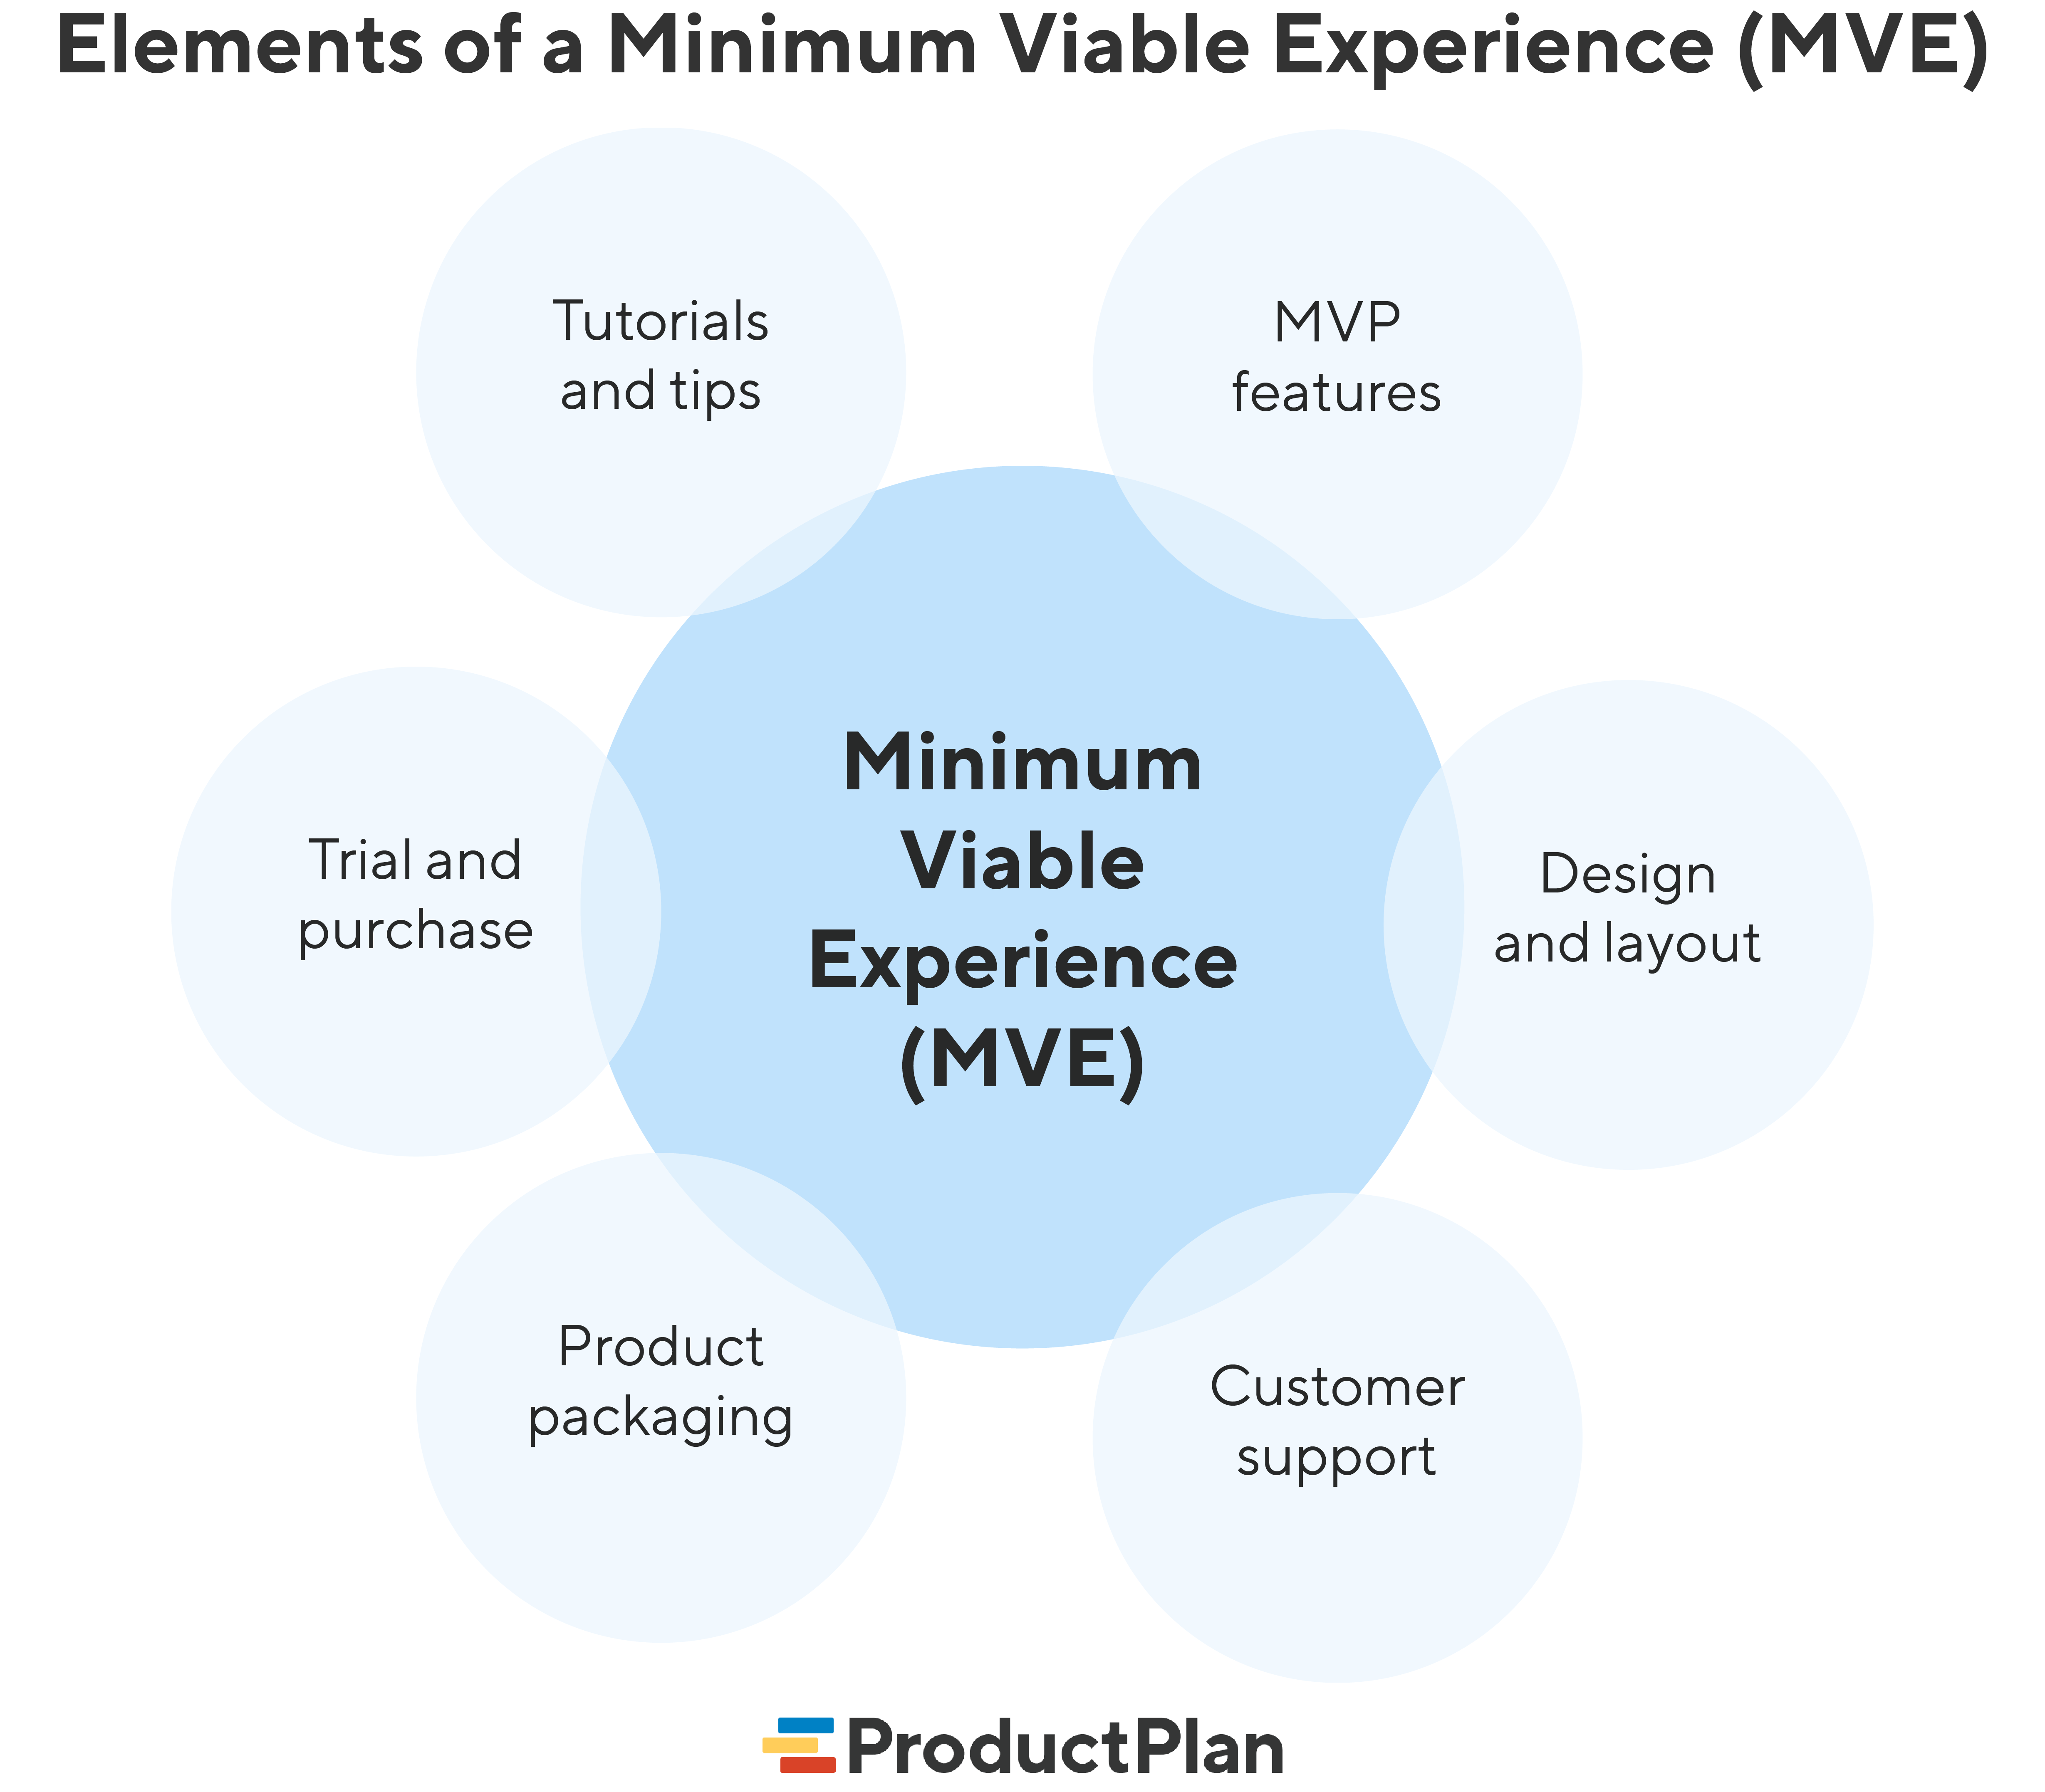 What's Your MVL (Minimum Viable Lifestyle)?